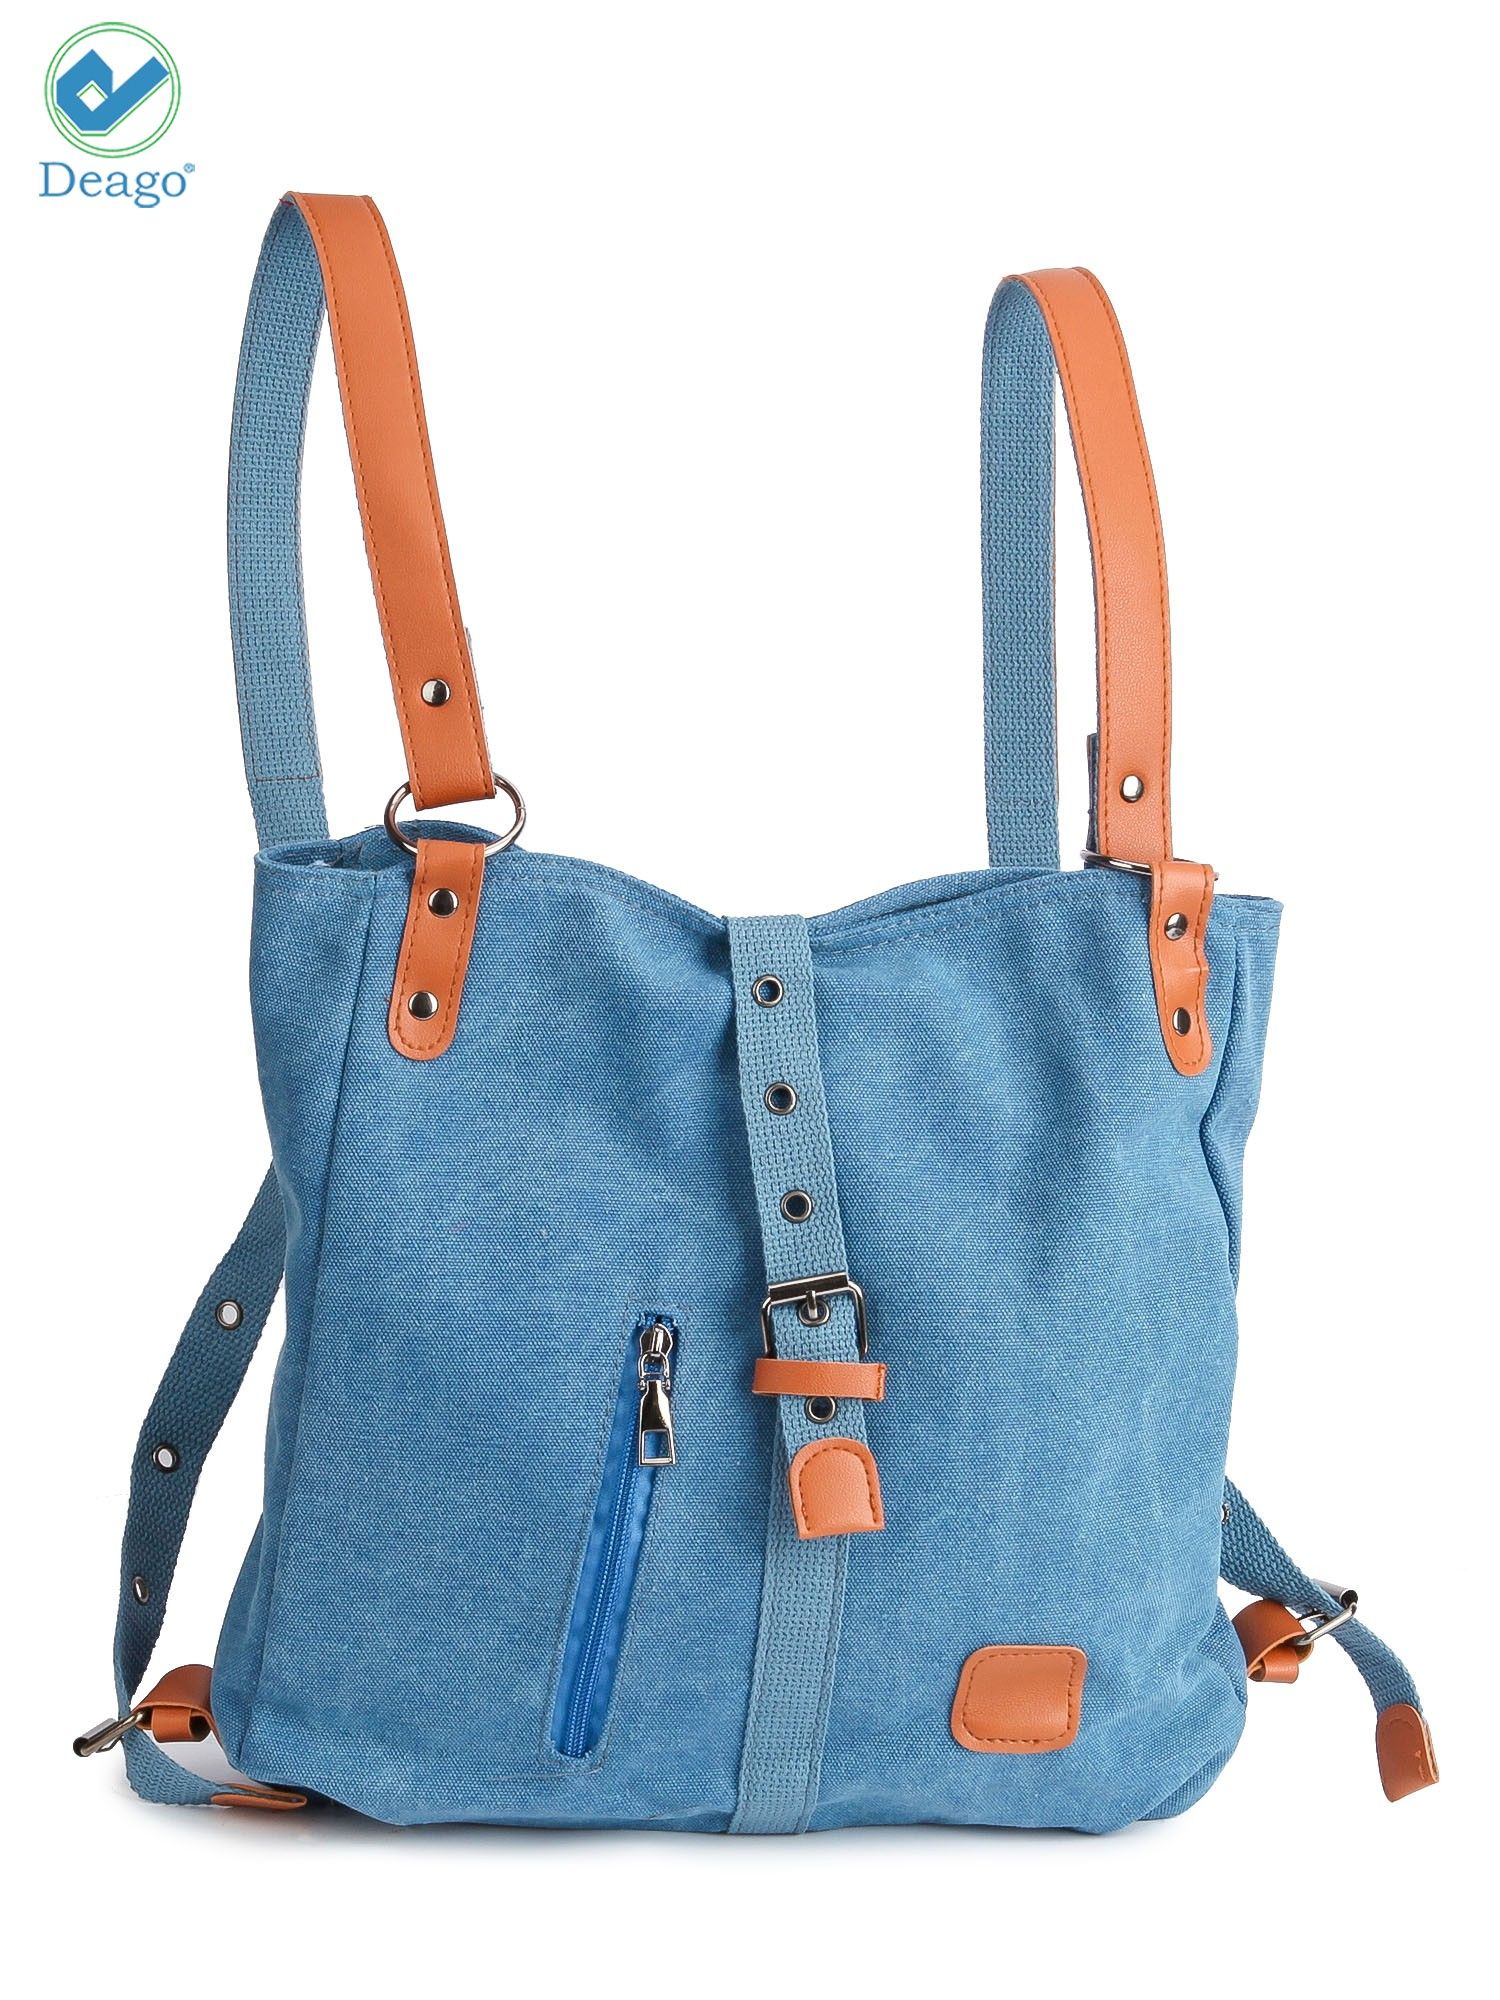 Deago Purse Handbag for Women Canvas Tote Bag Casual Shoulder Bag School Bag Rucksack Convertible Backpack (Blue) - image 3 of 10